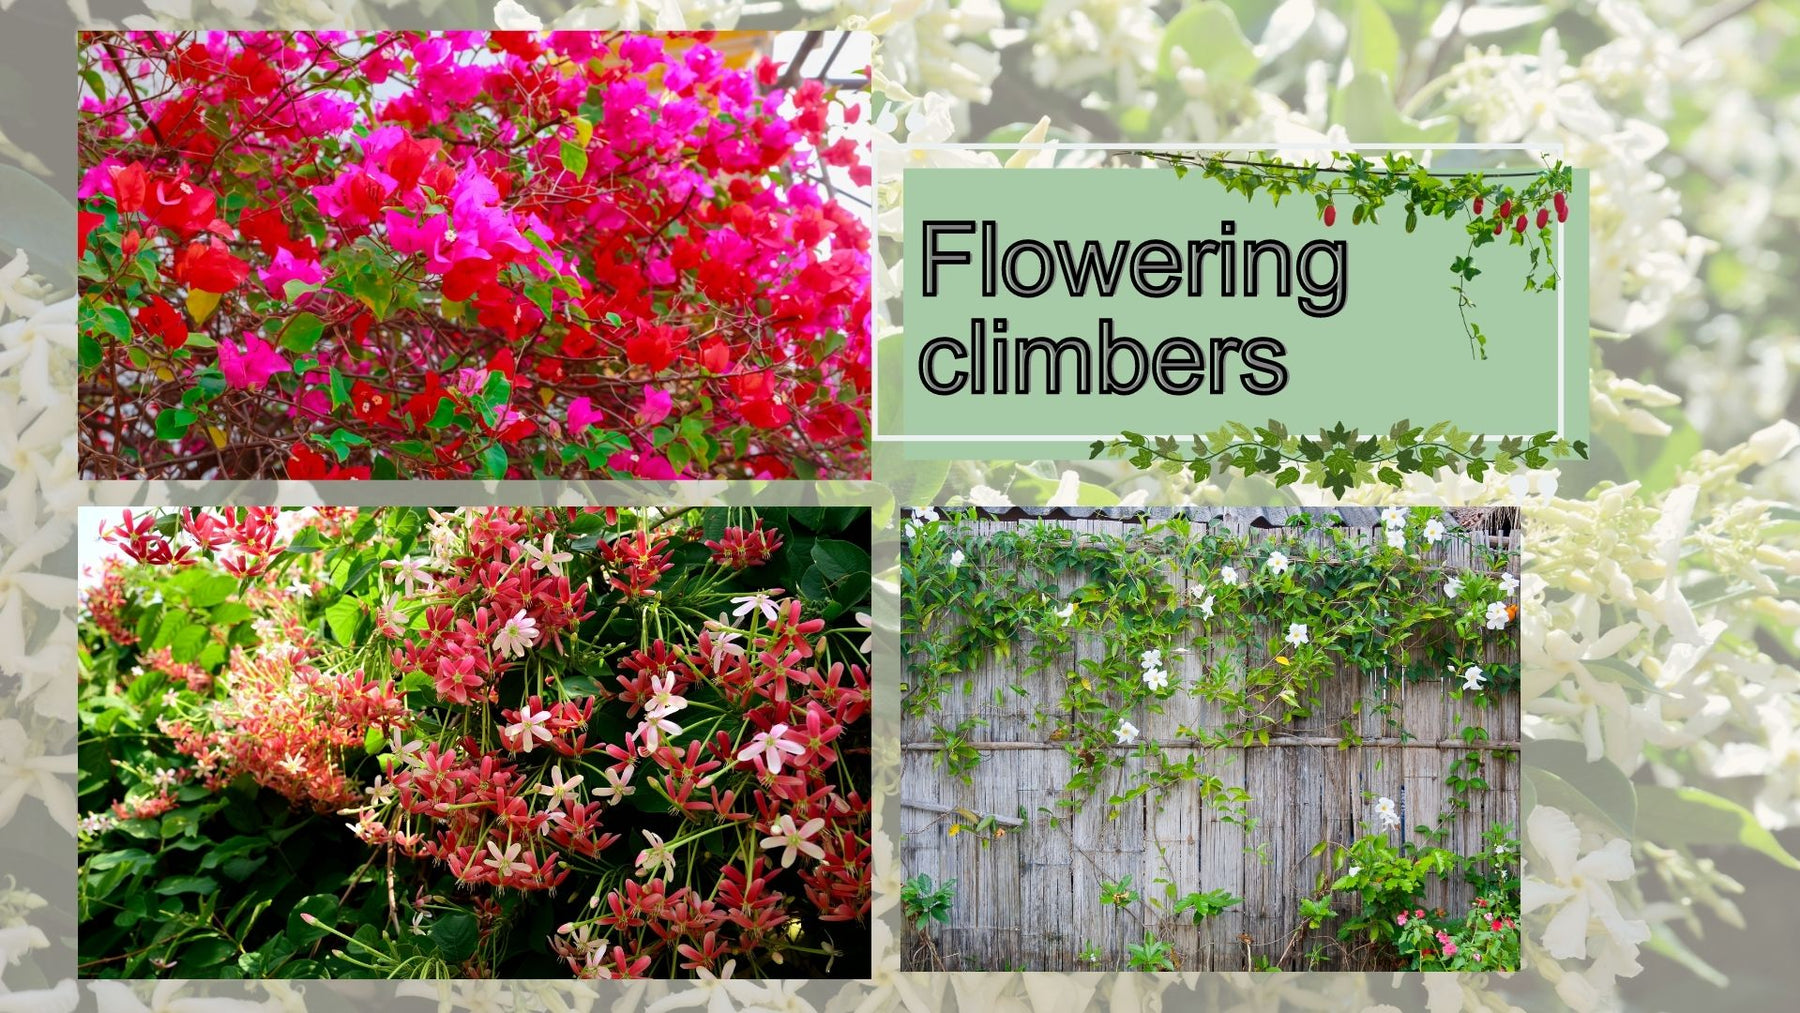 Top 13 flowering climbers for an Indian garden